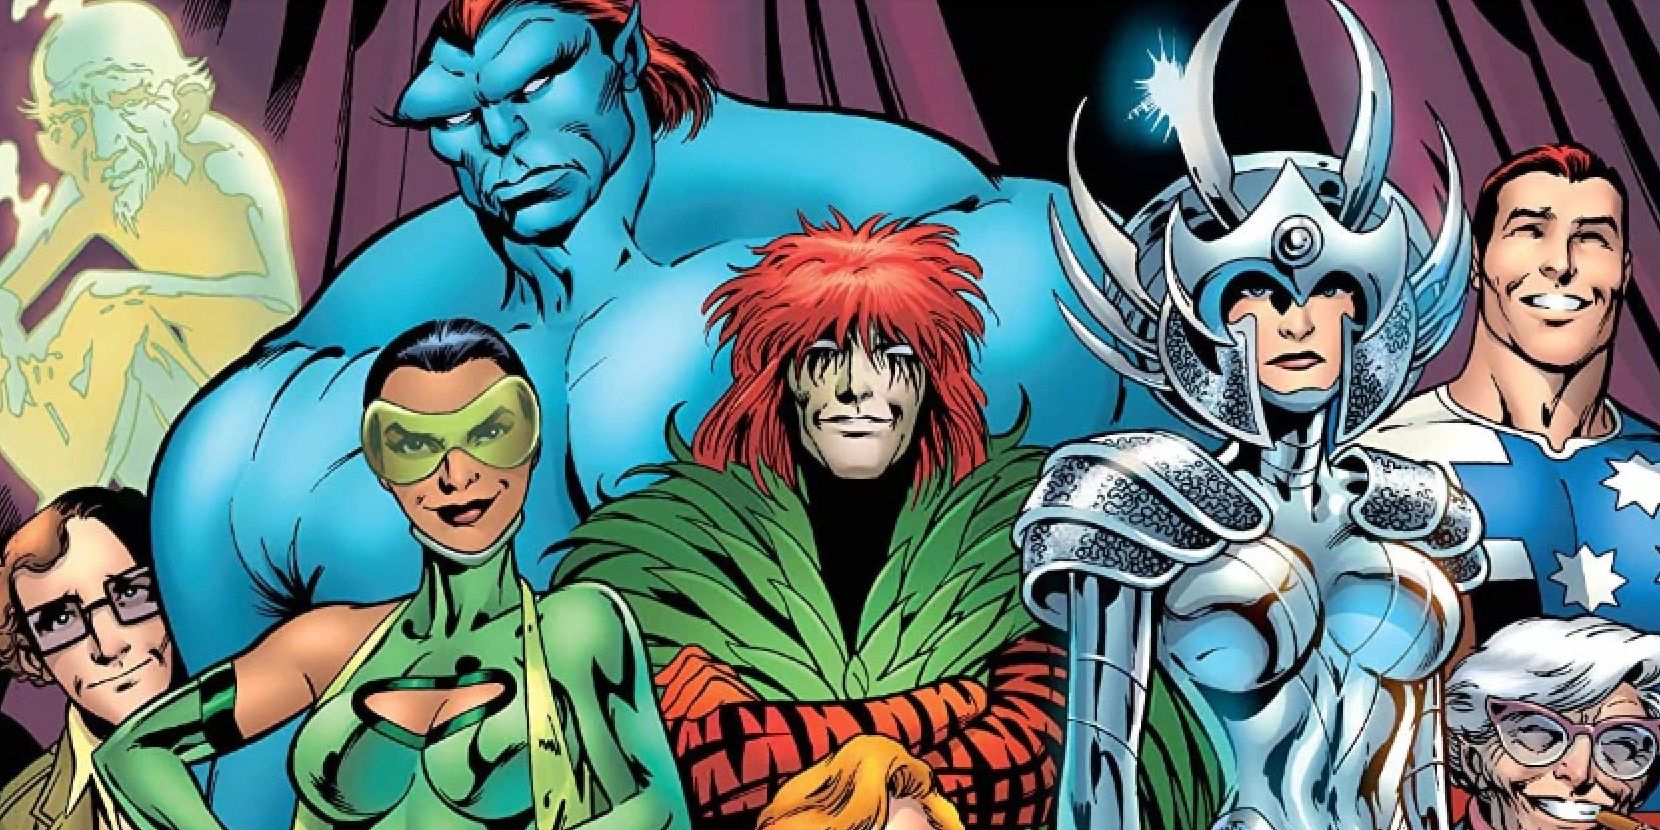 Members of Clan Destine in Marvel comics